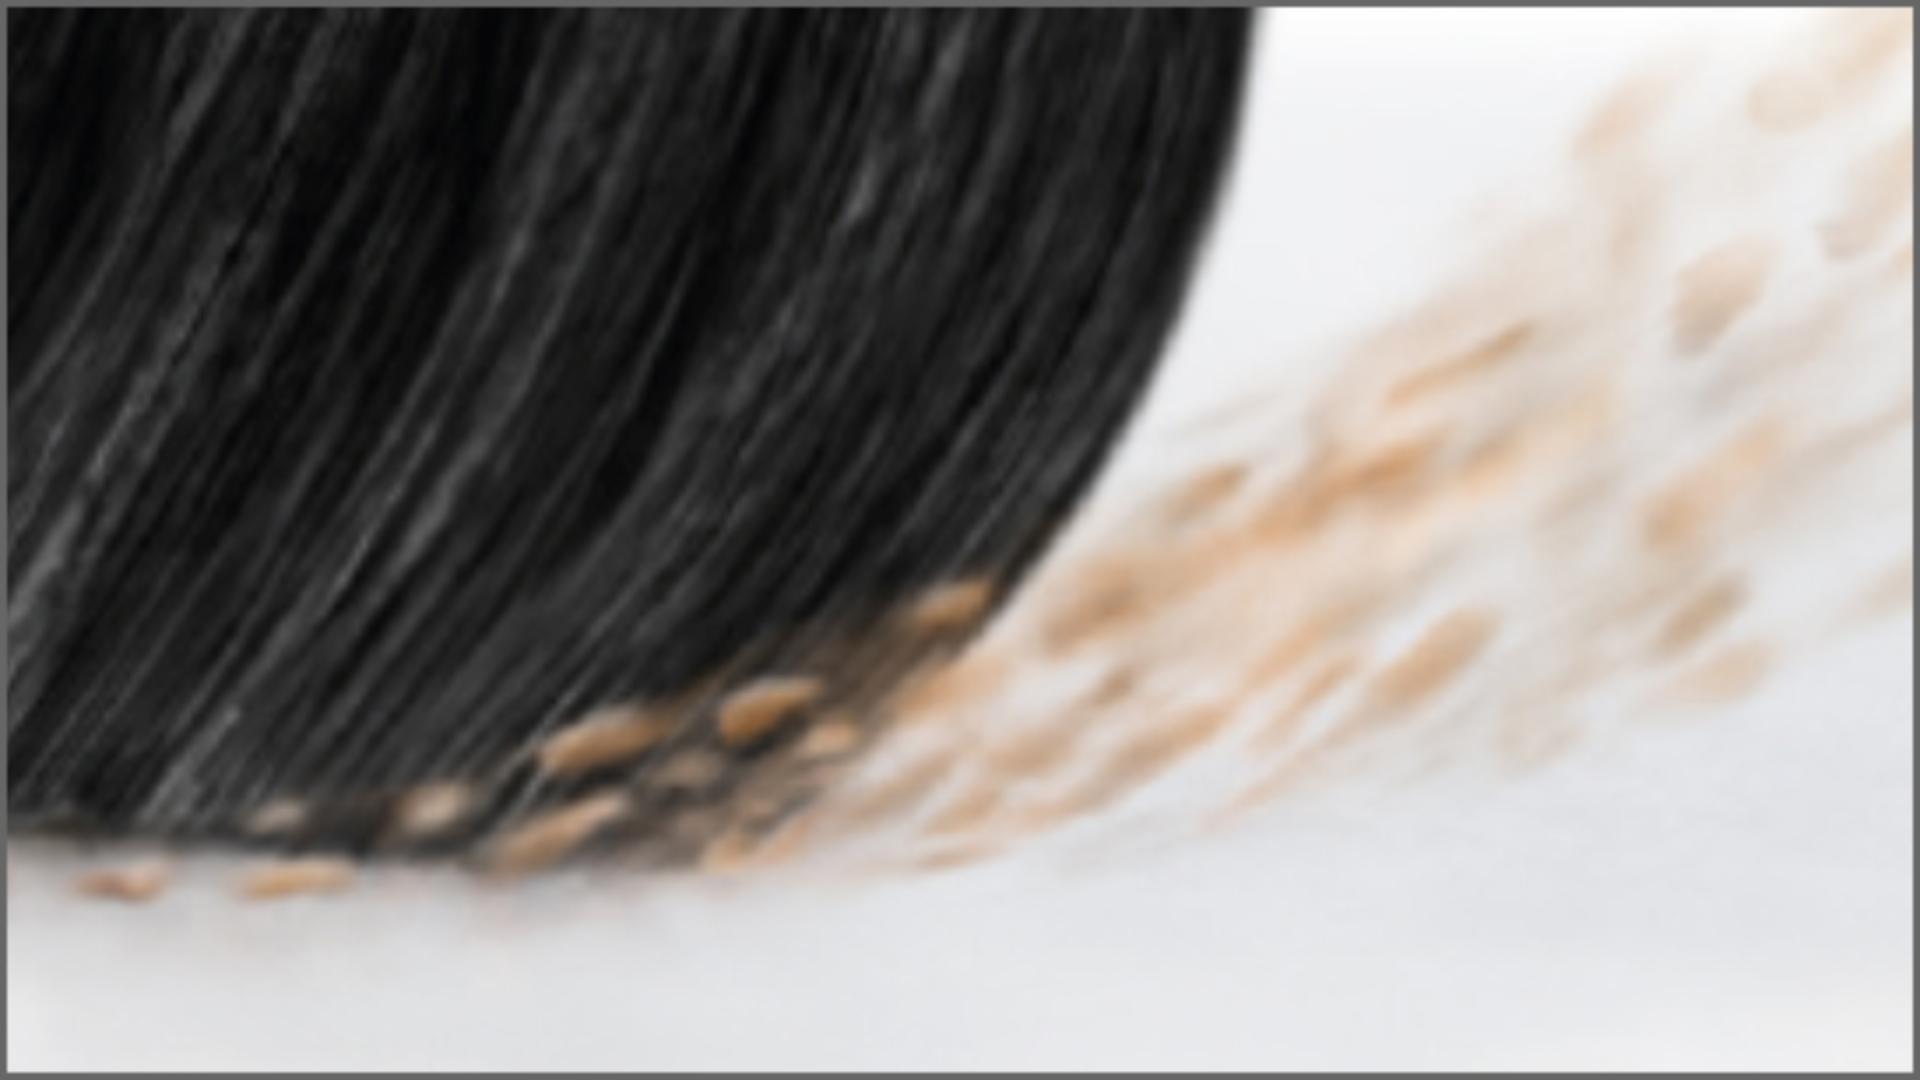 Carbon fibre filaments on Dyson's High Torque cleaner head brush bar